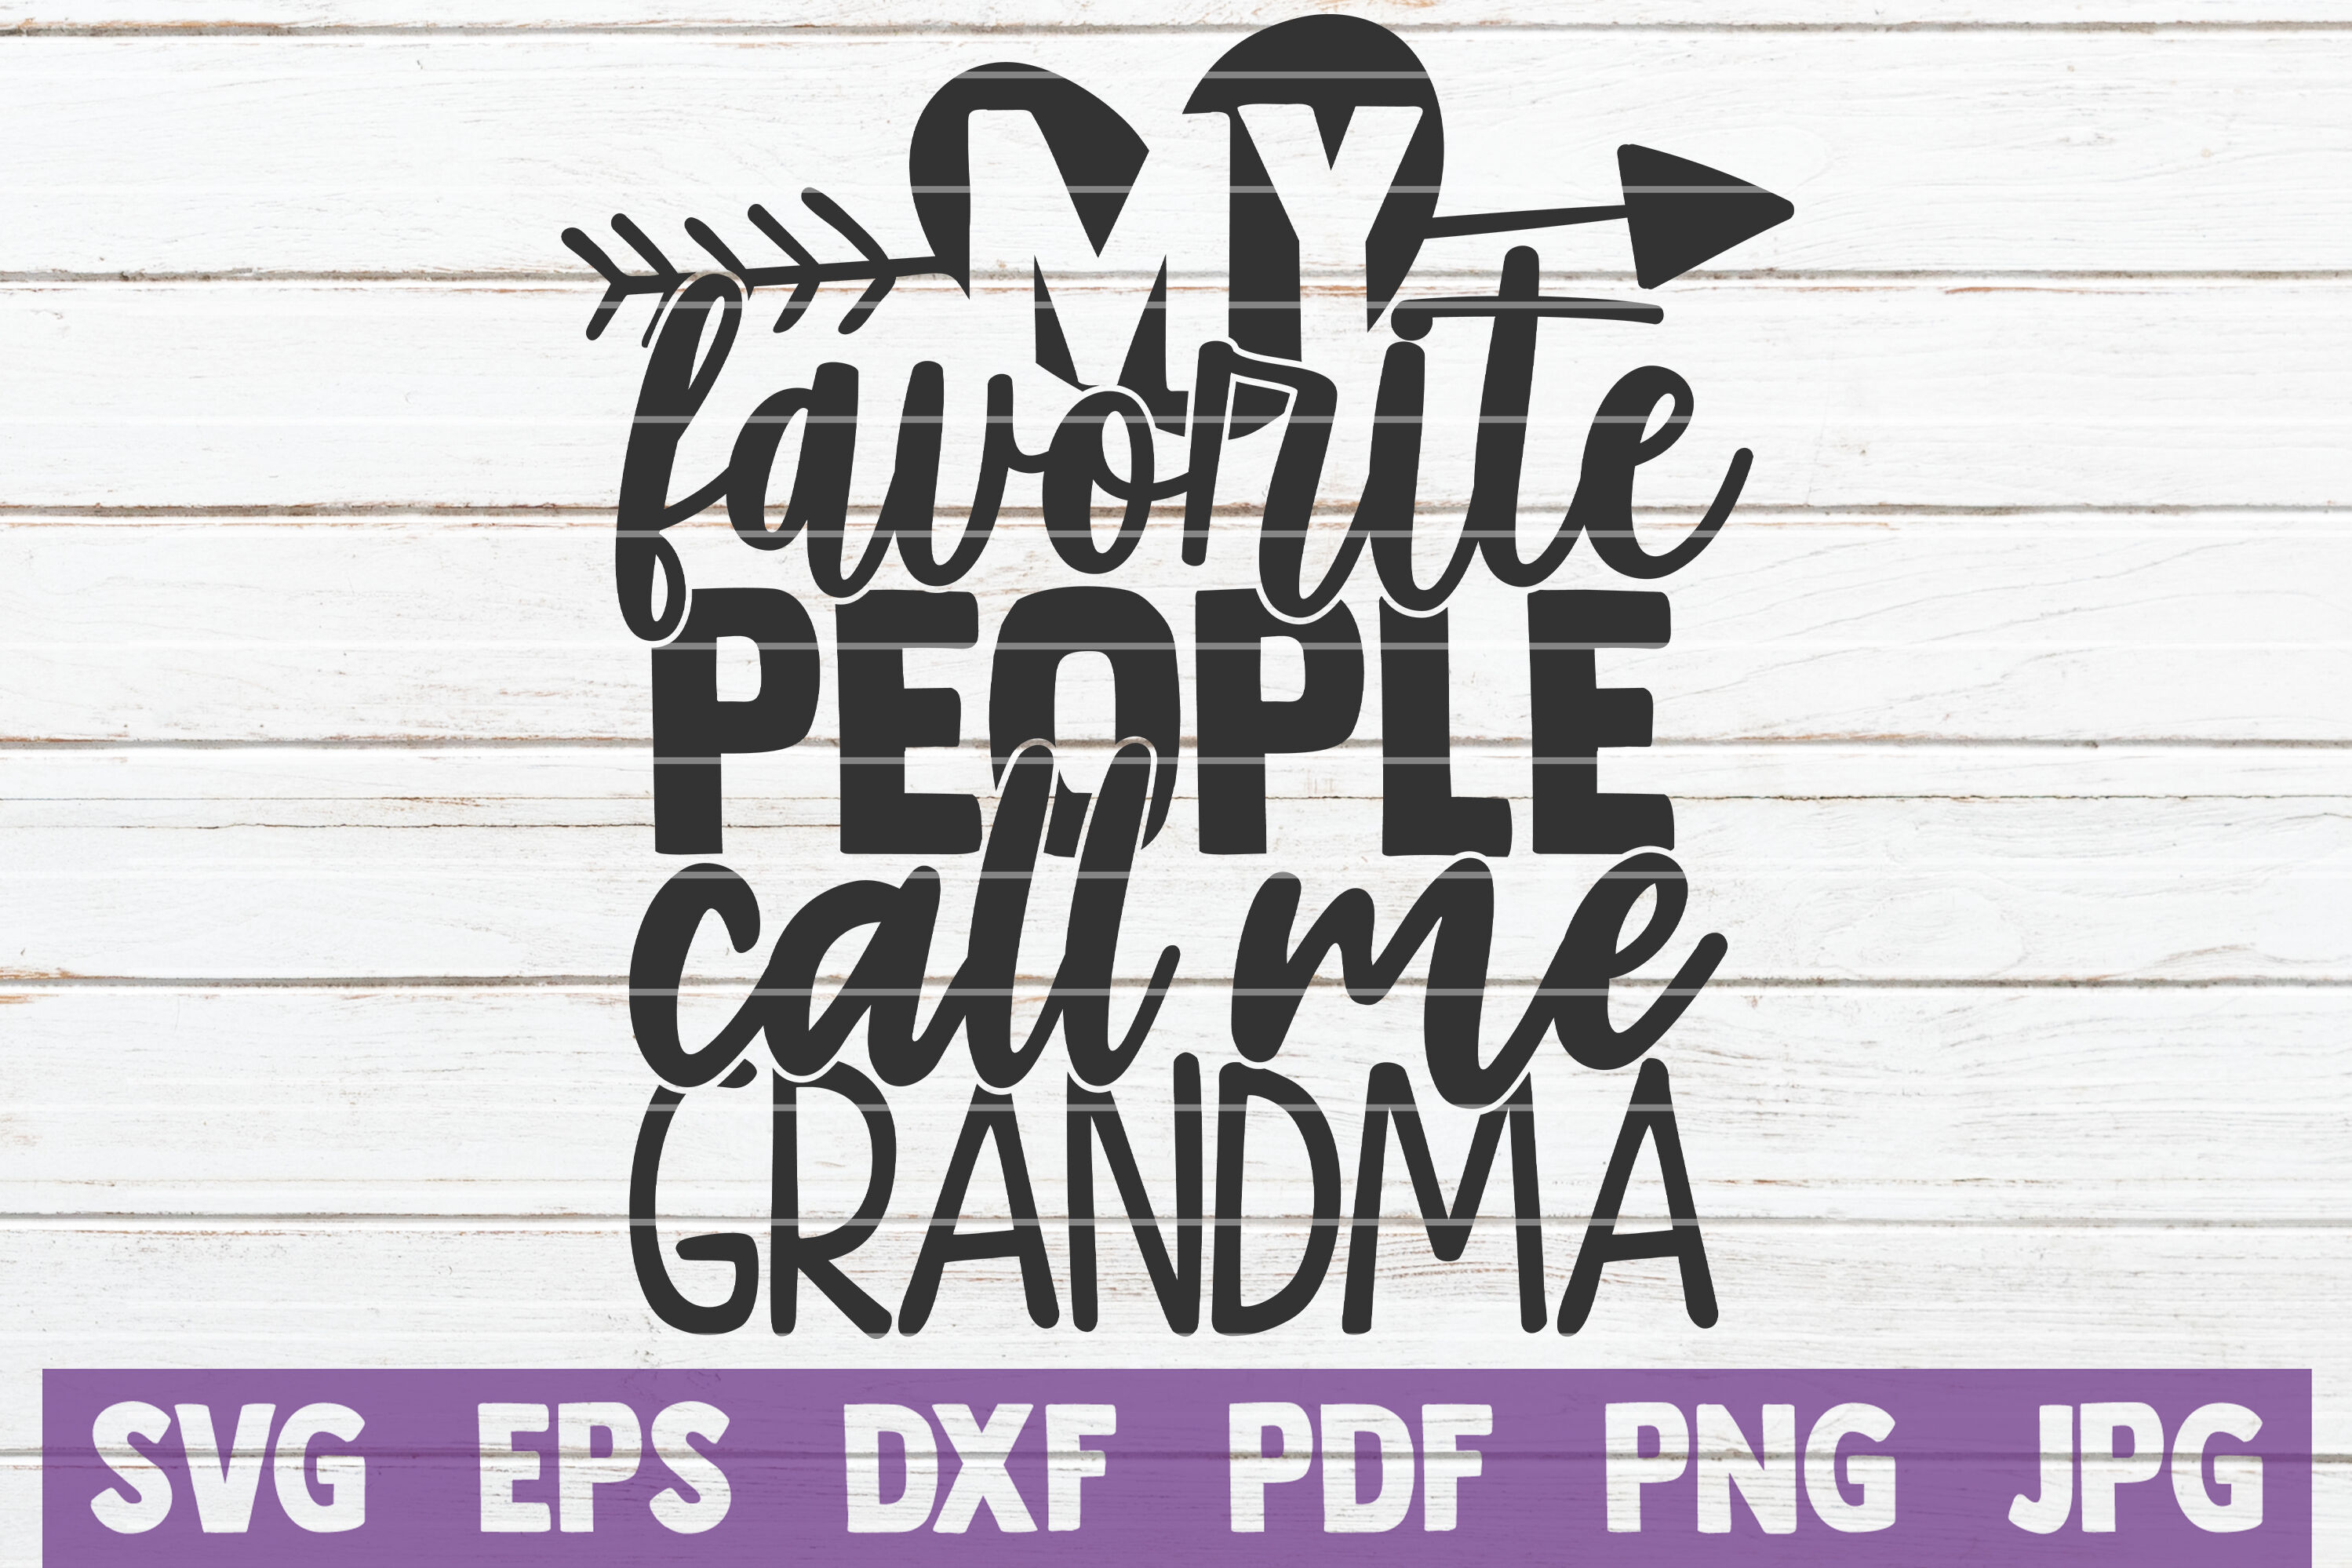 Download Grandma SVG Bundle | Funny Grandma Quotes SVG Cut Files By MintyMarshmallows | TheHungryJPEG.com